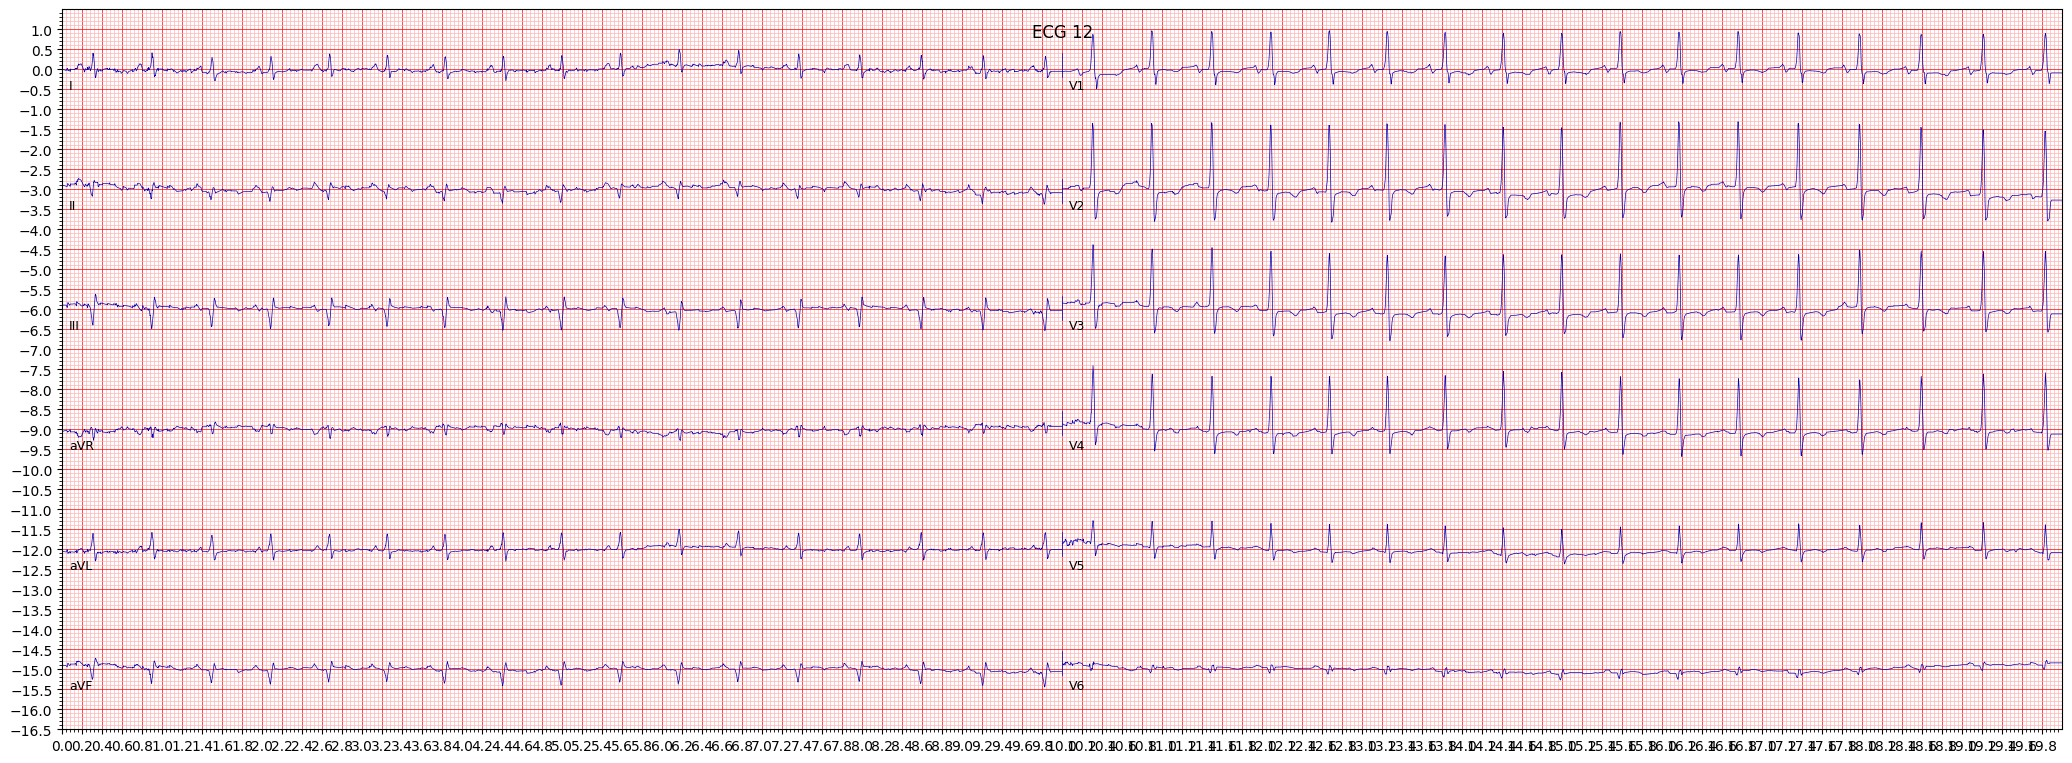 inferoposterolateral myocardial infarction (IPLMI) example 12173